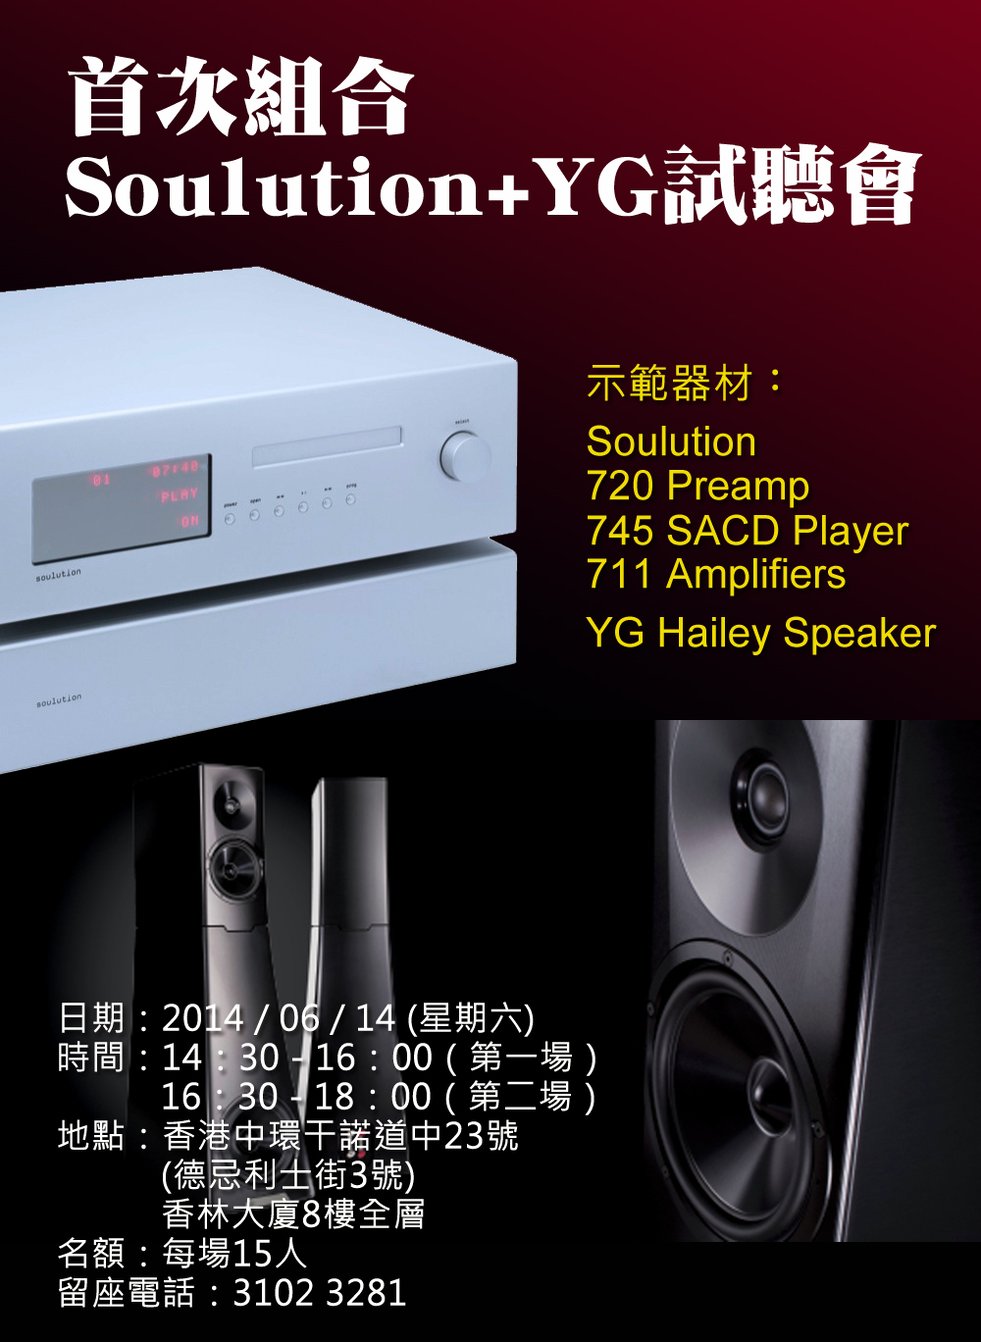 Soulution_+YG 試聽會